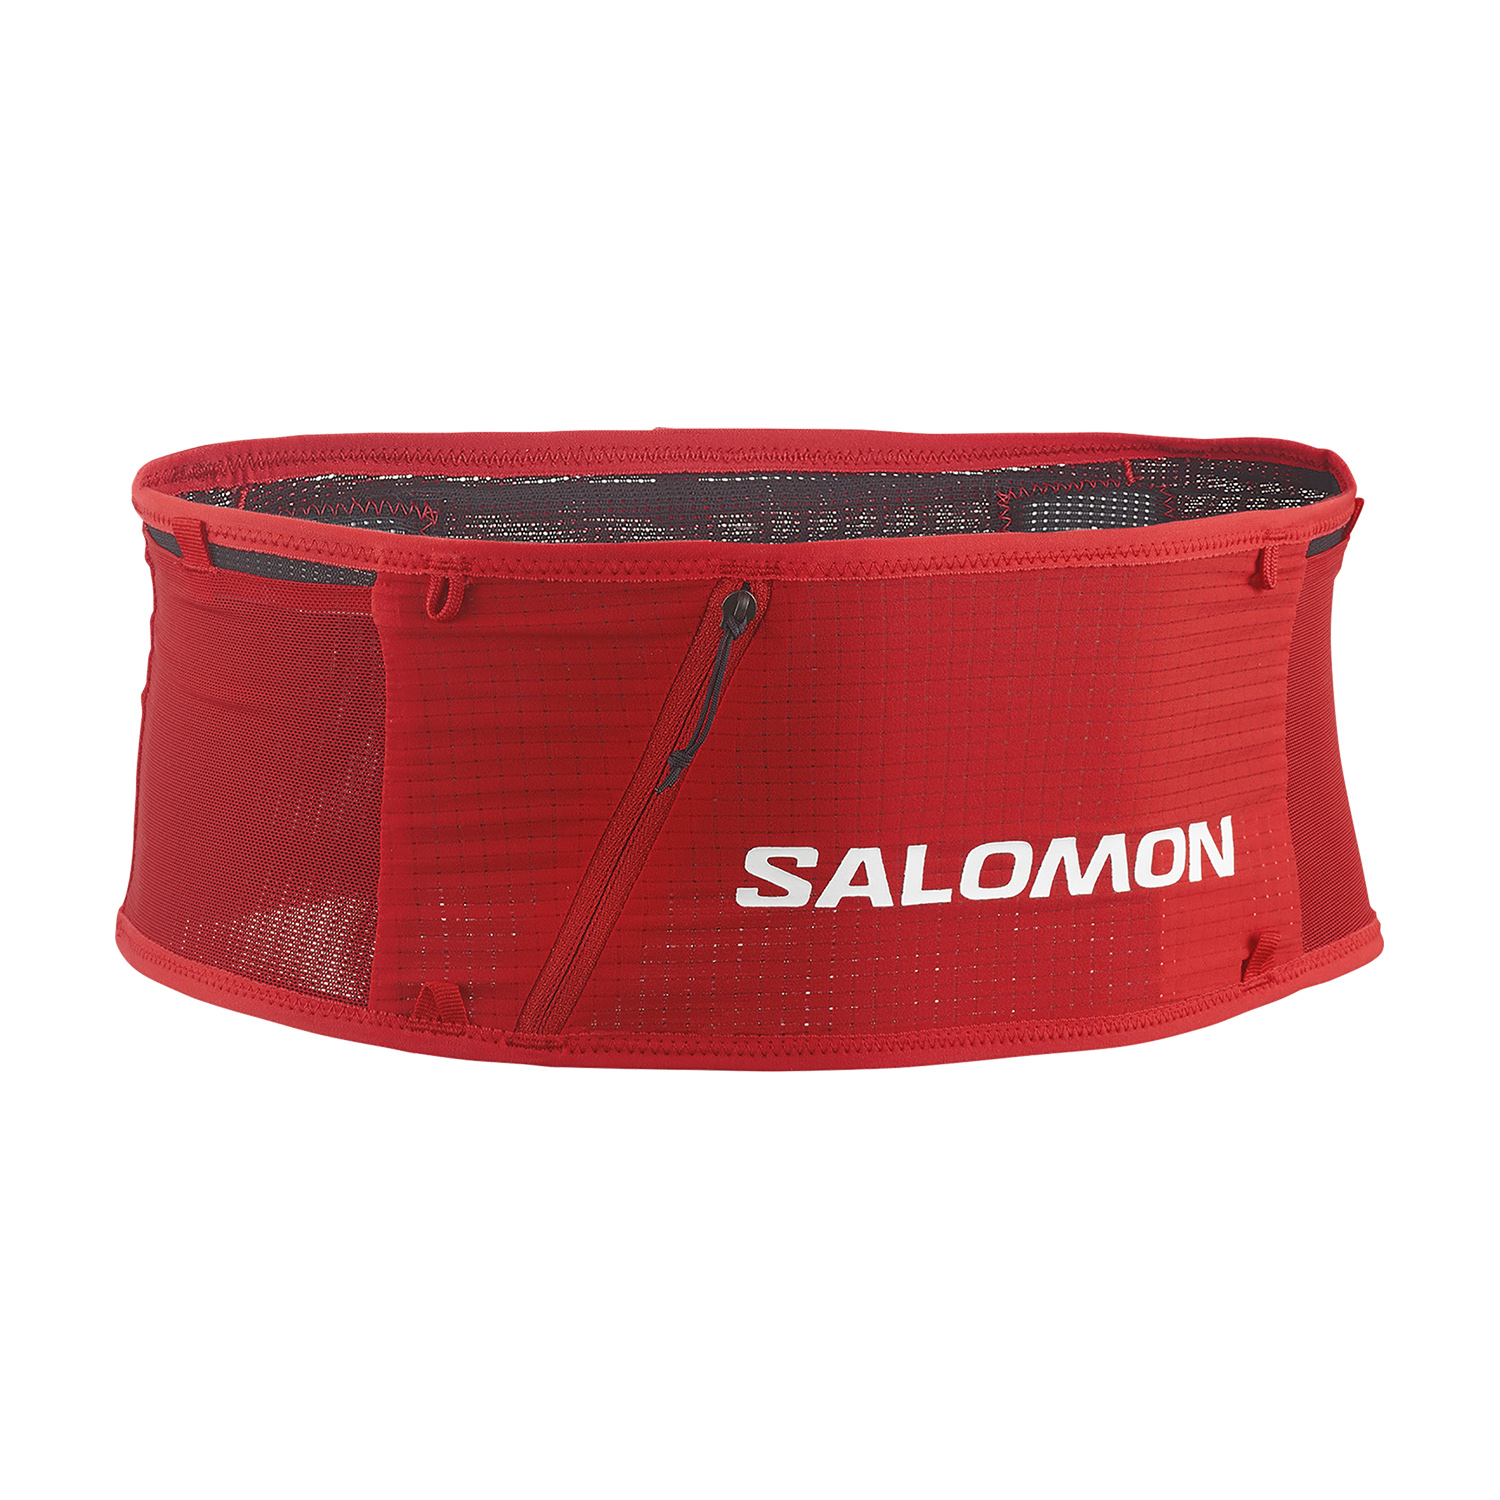 Salomon S/Lab Cinturón - Fiery Red/Black